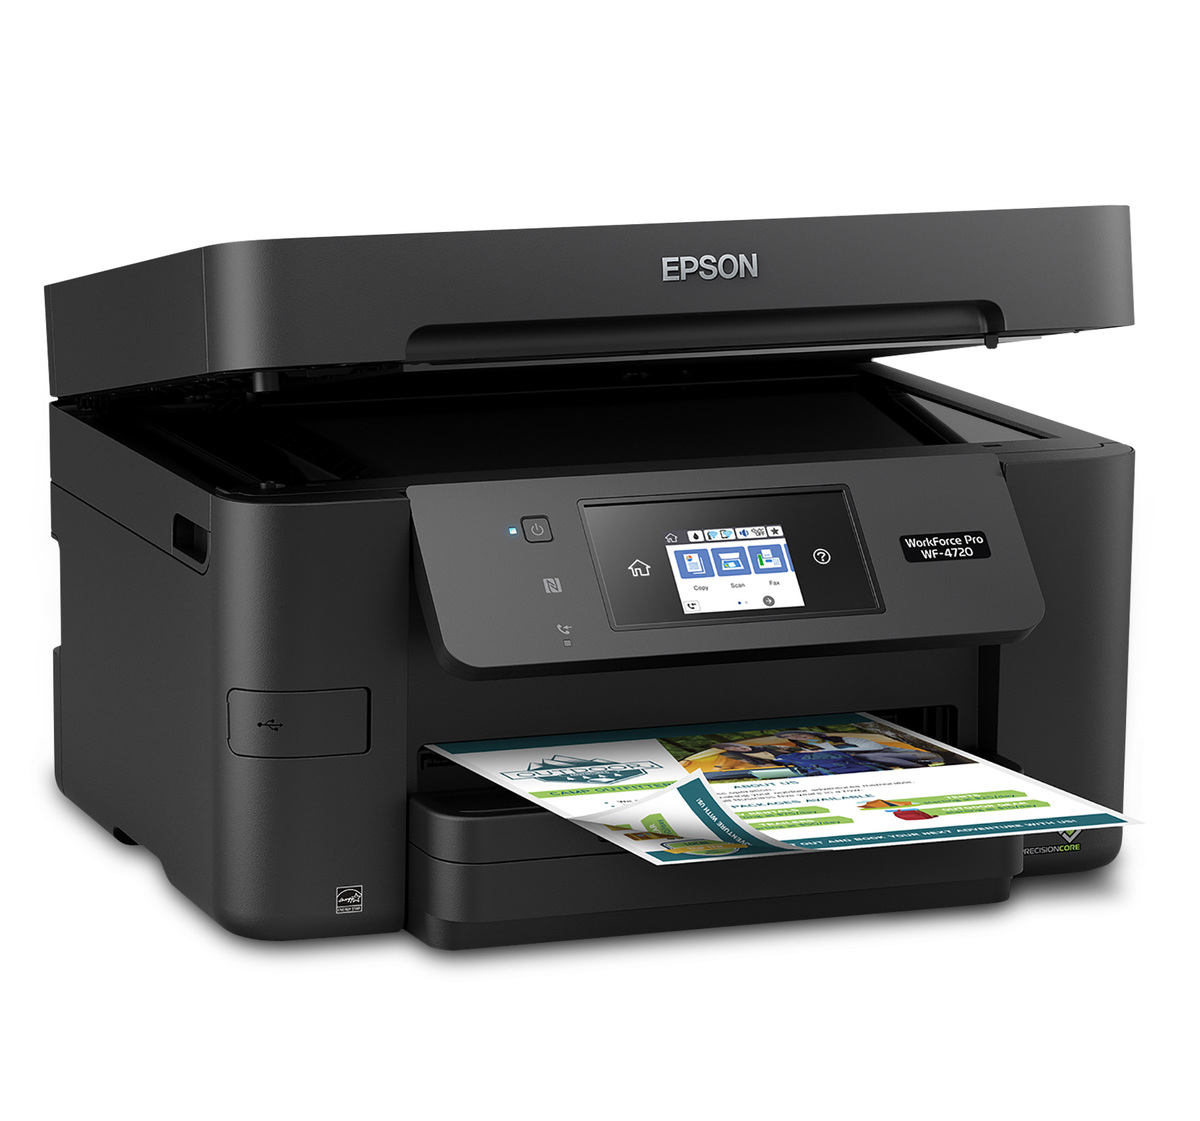  Epson  WorkForce Pro WF 4720 All in One Printer Inkjet 